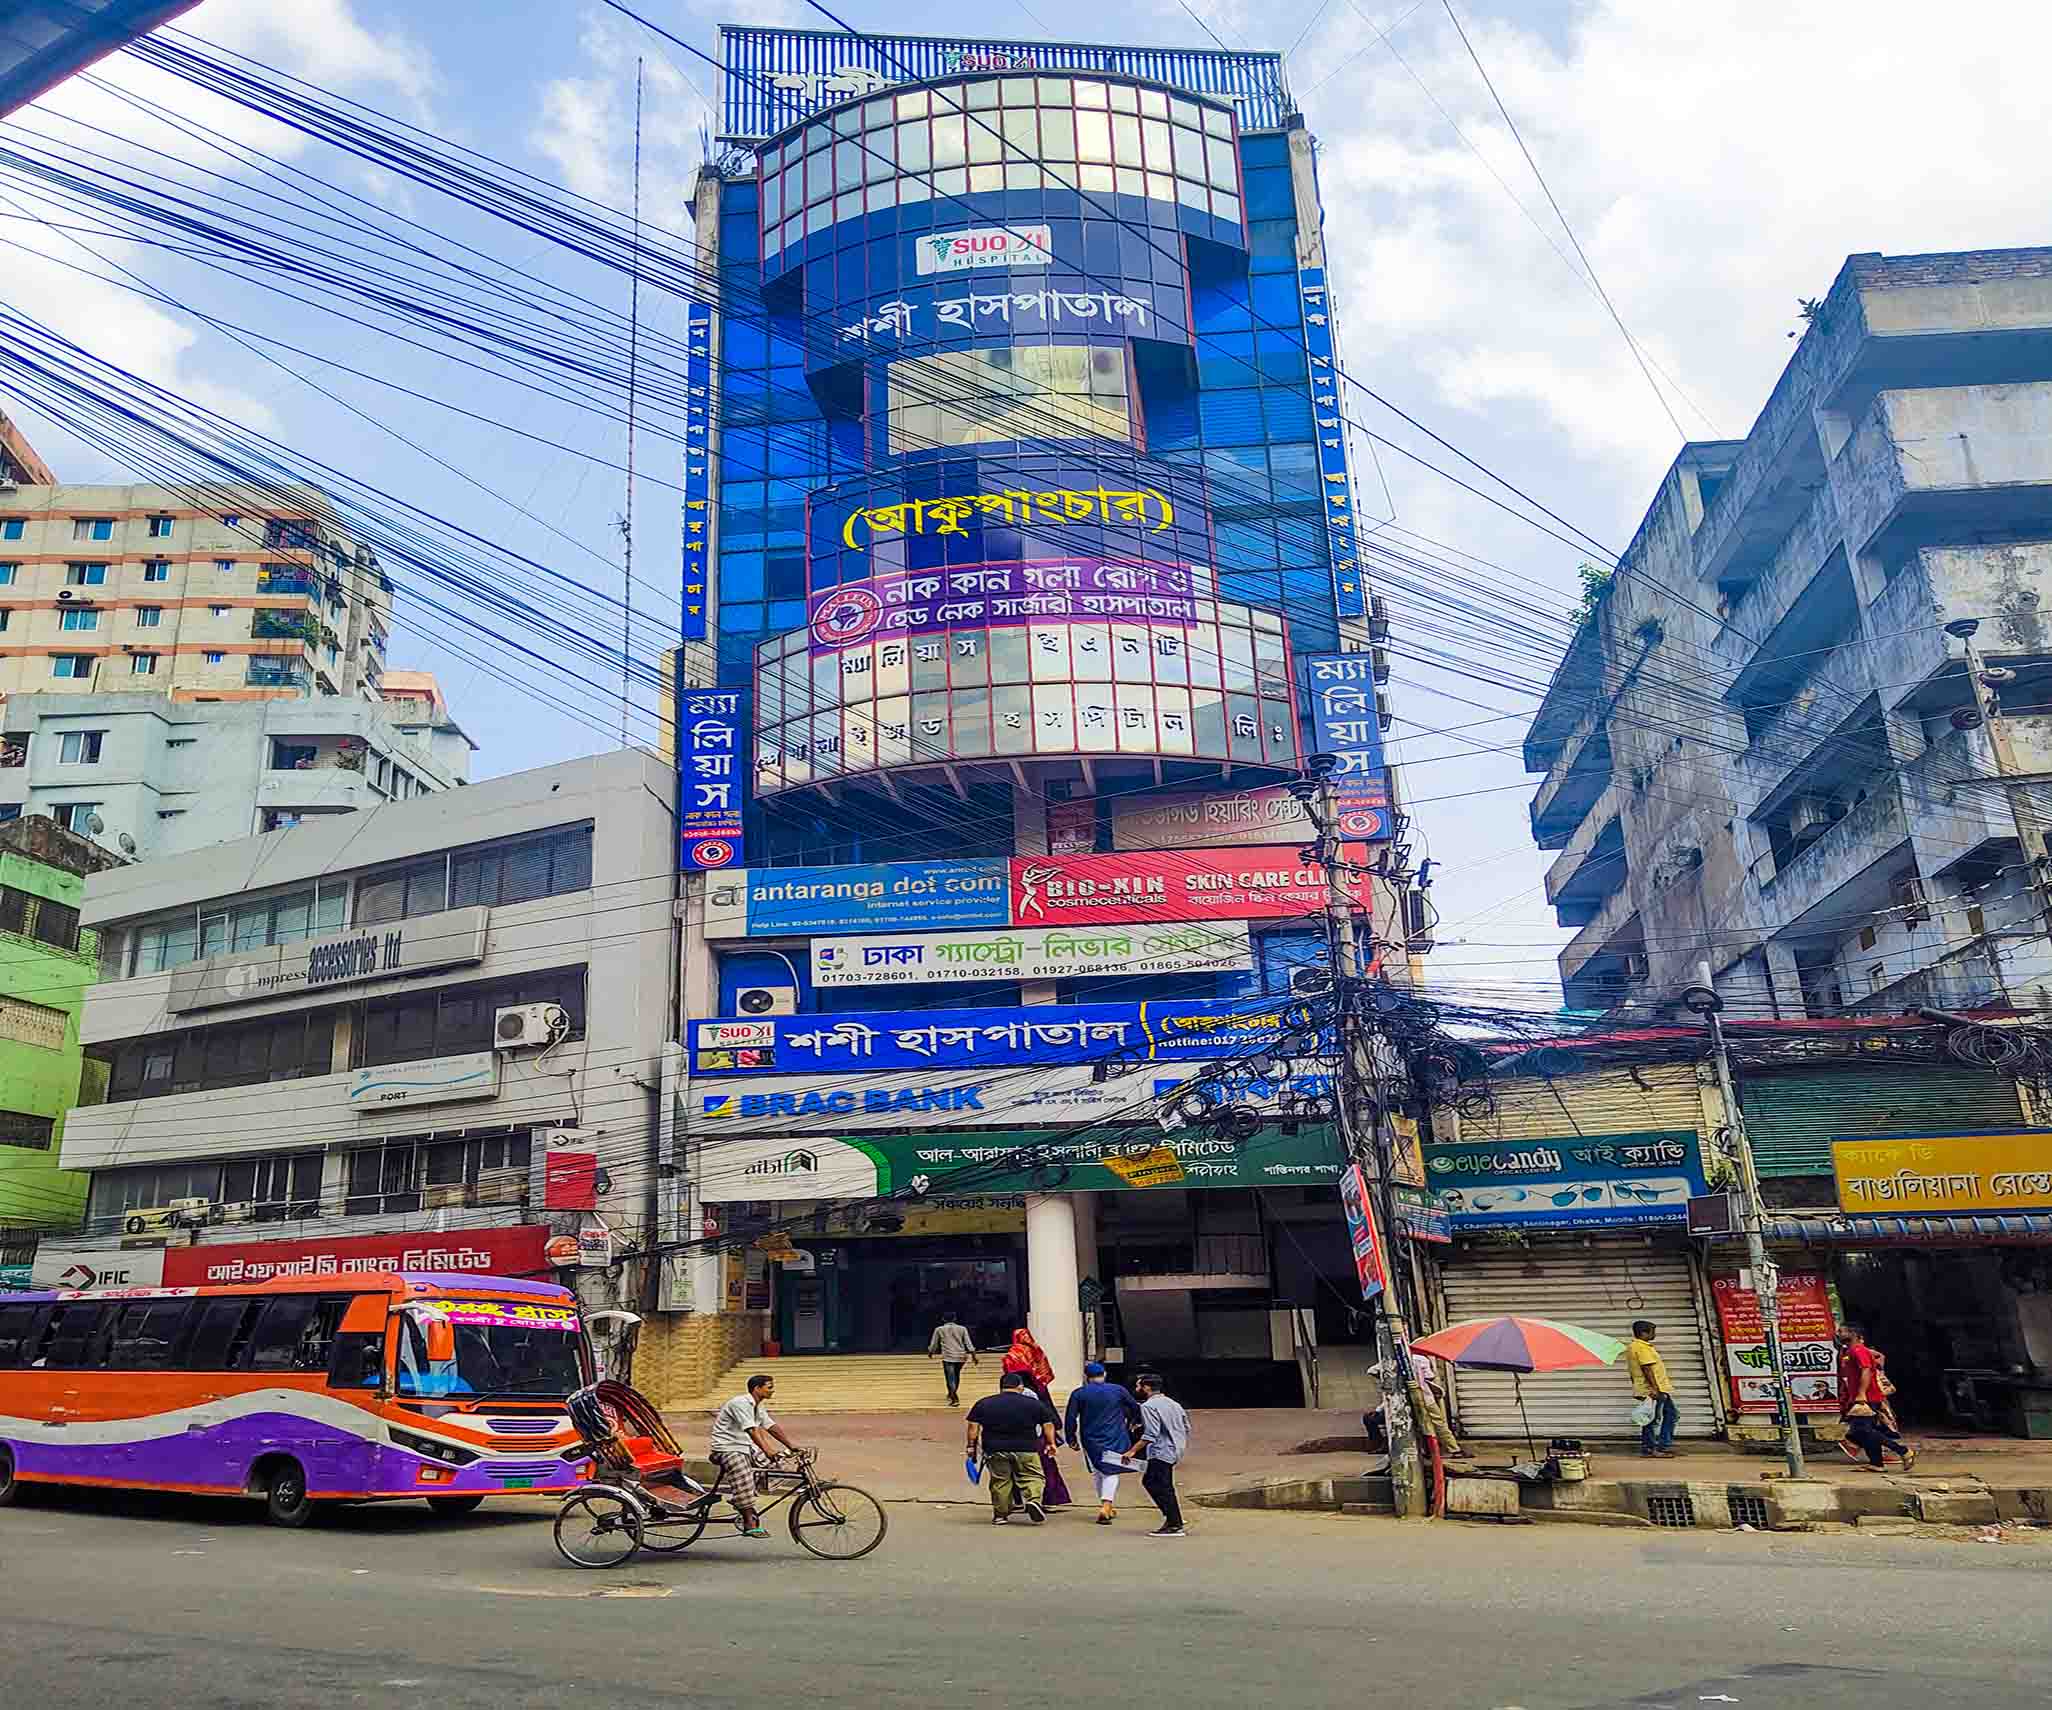 Broadband Internet Provider in Dhaka